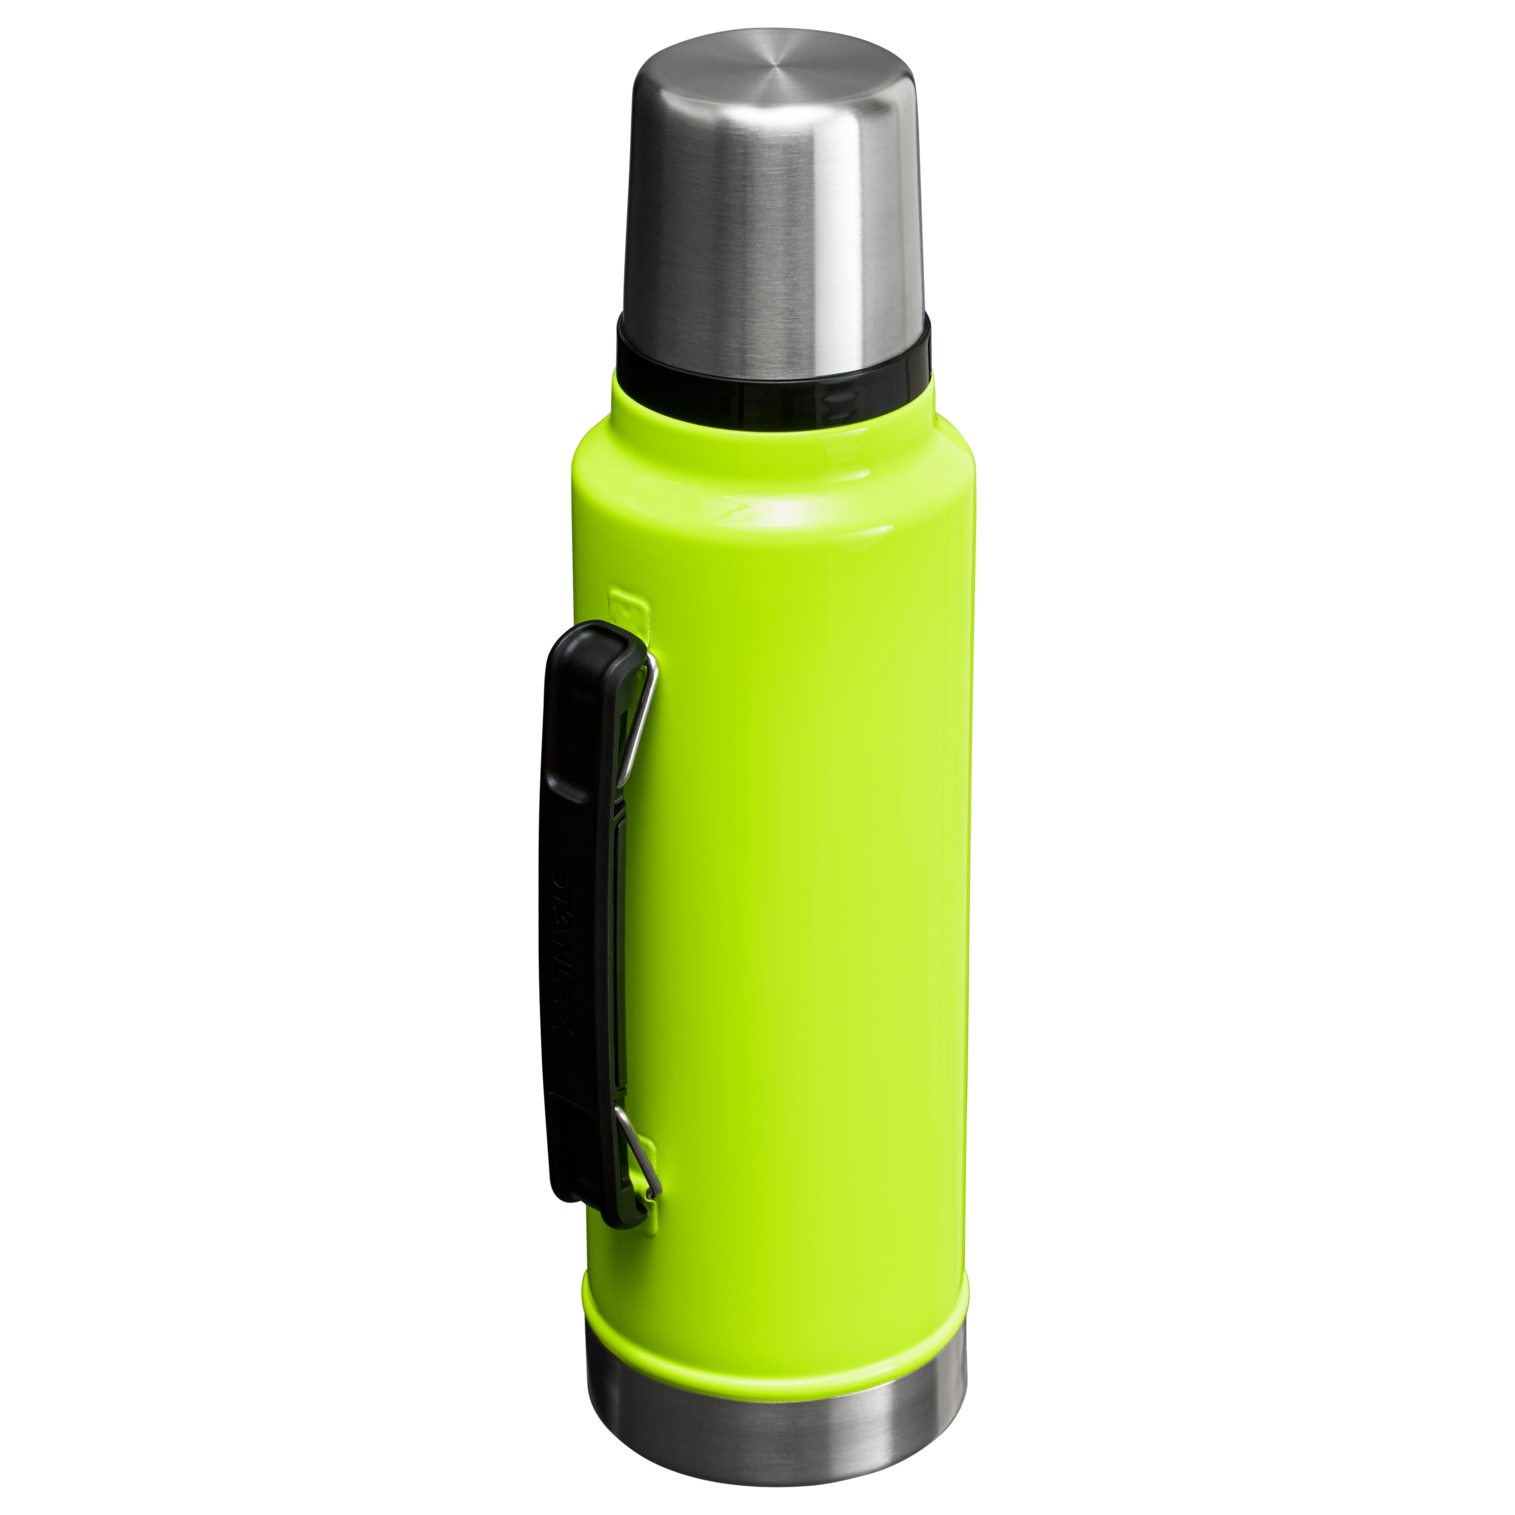 The Neon Classic Legendary Bottle | 1.5 QT: Neon Yellow